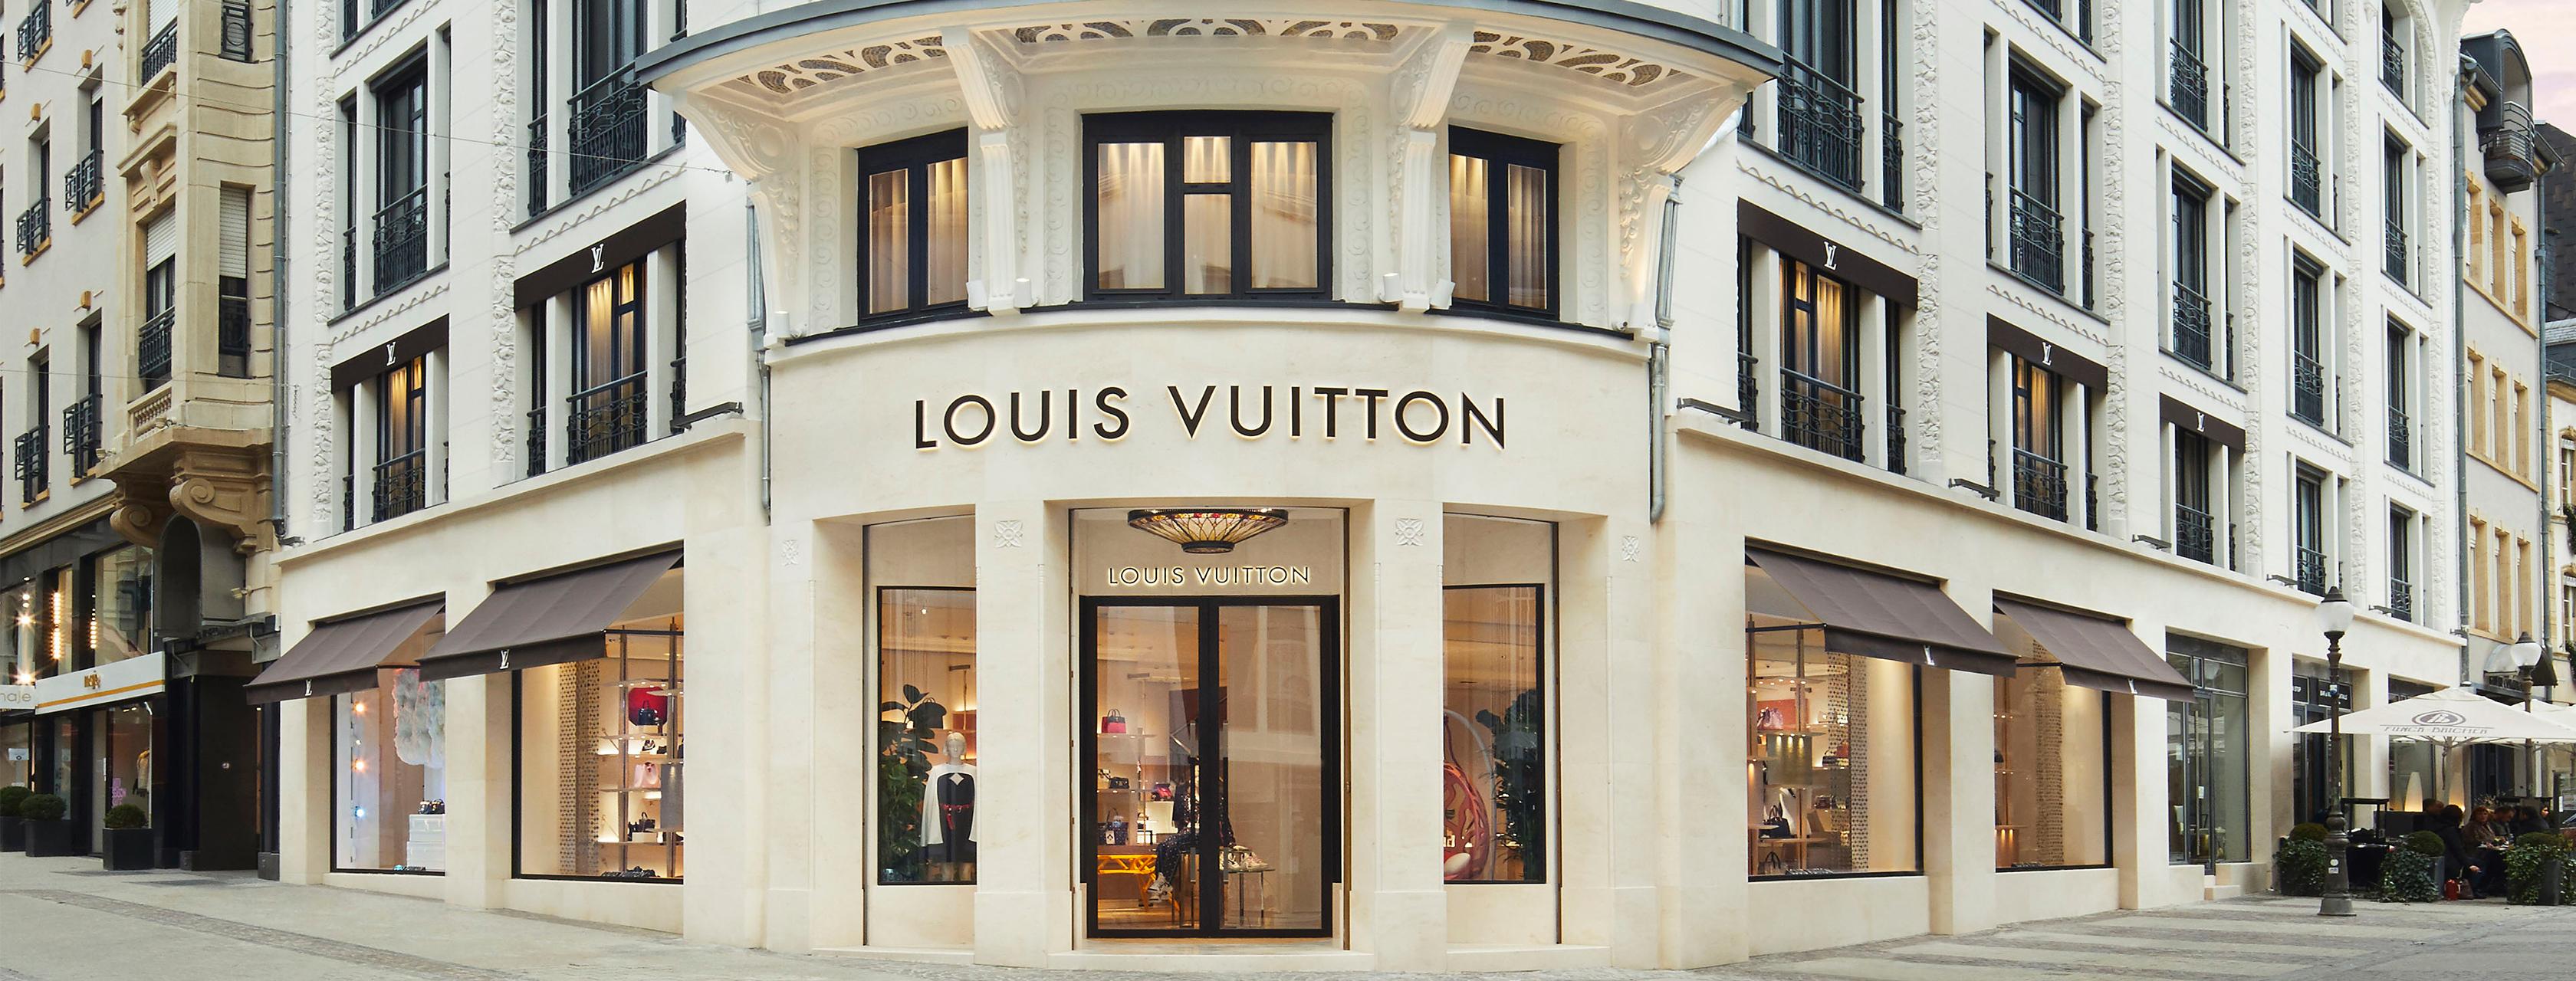 Louis Vuitton Portugal Usine